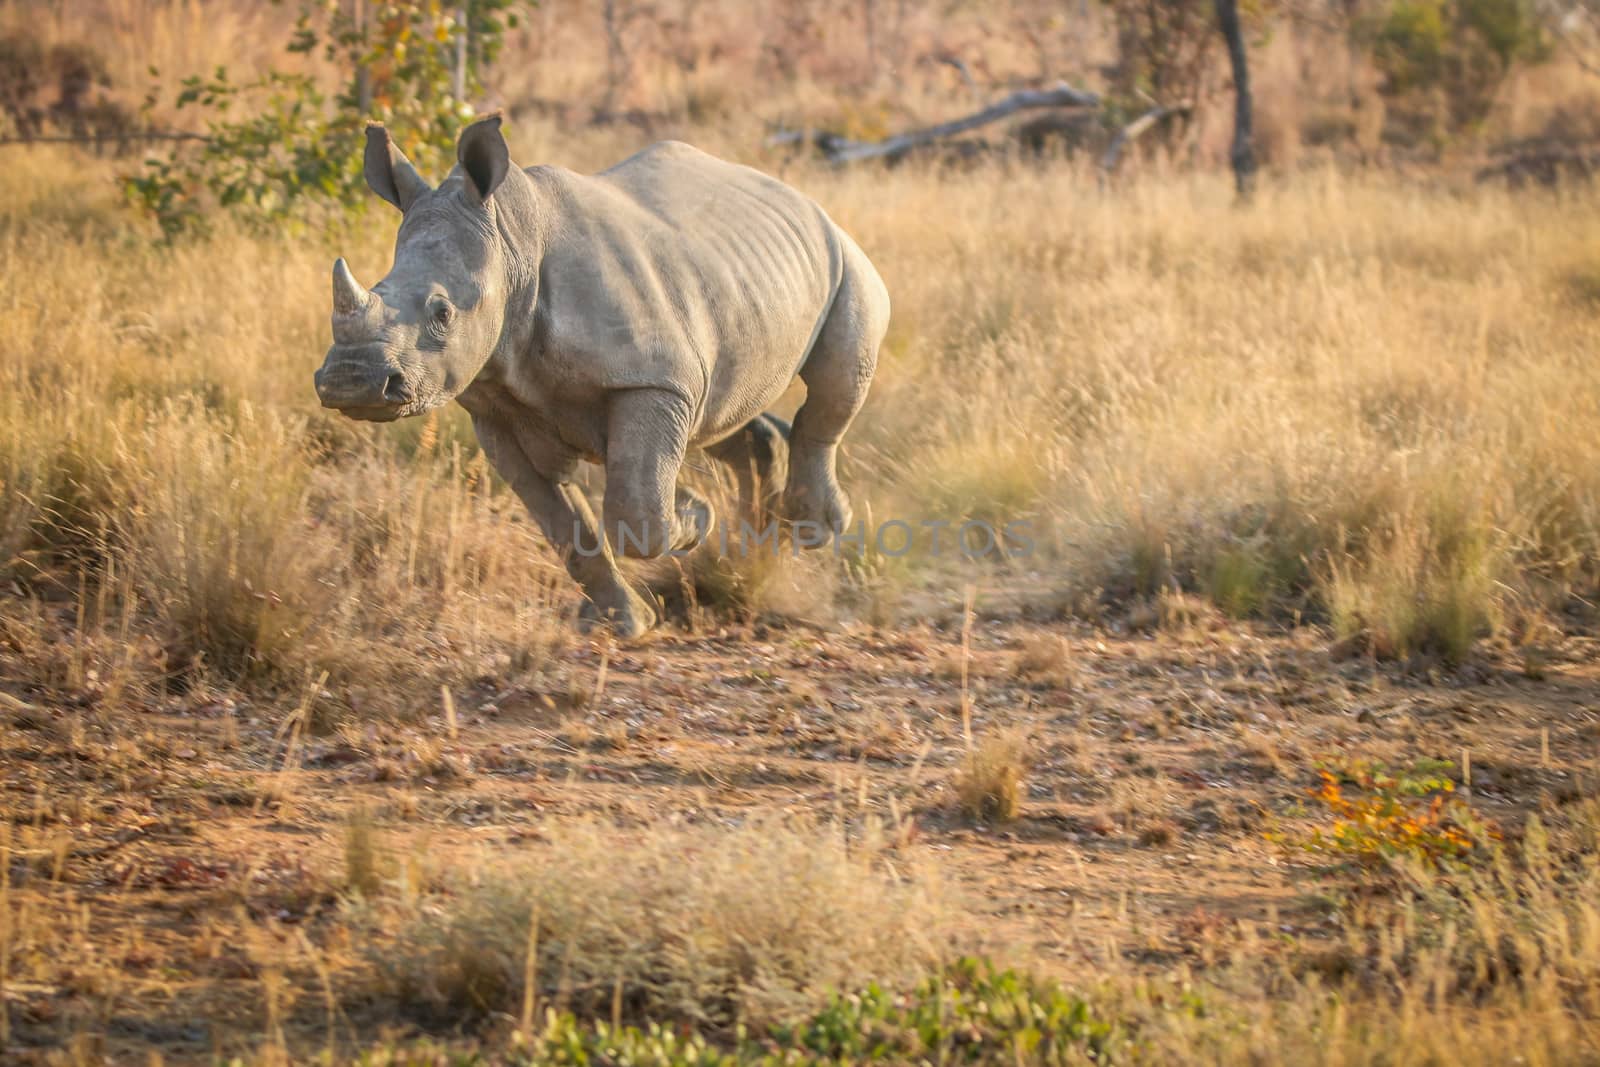 White rhino running in the grass, South Africa.